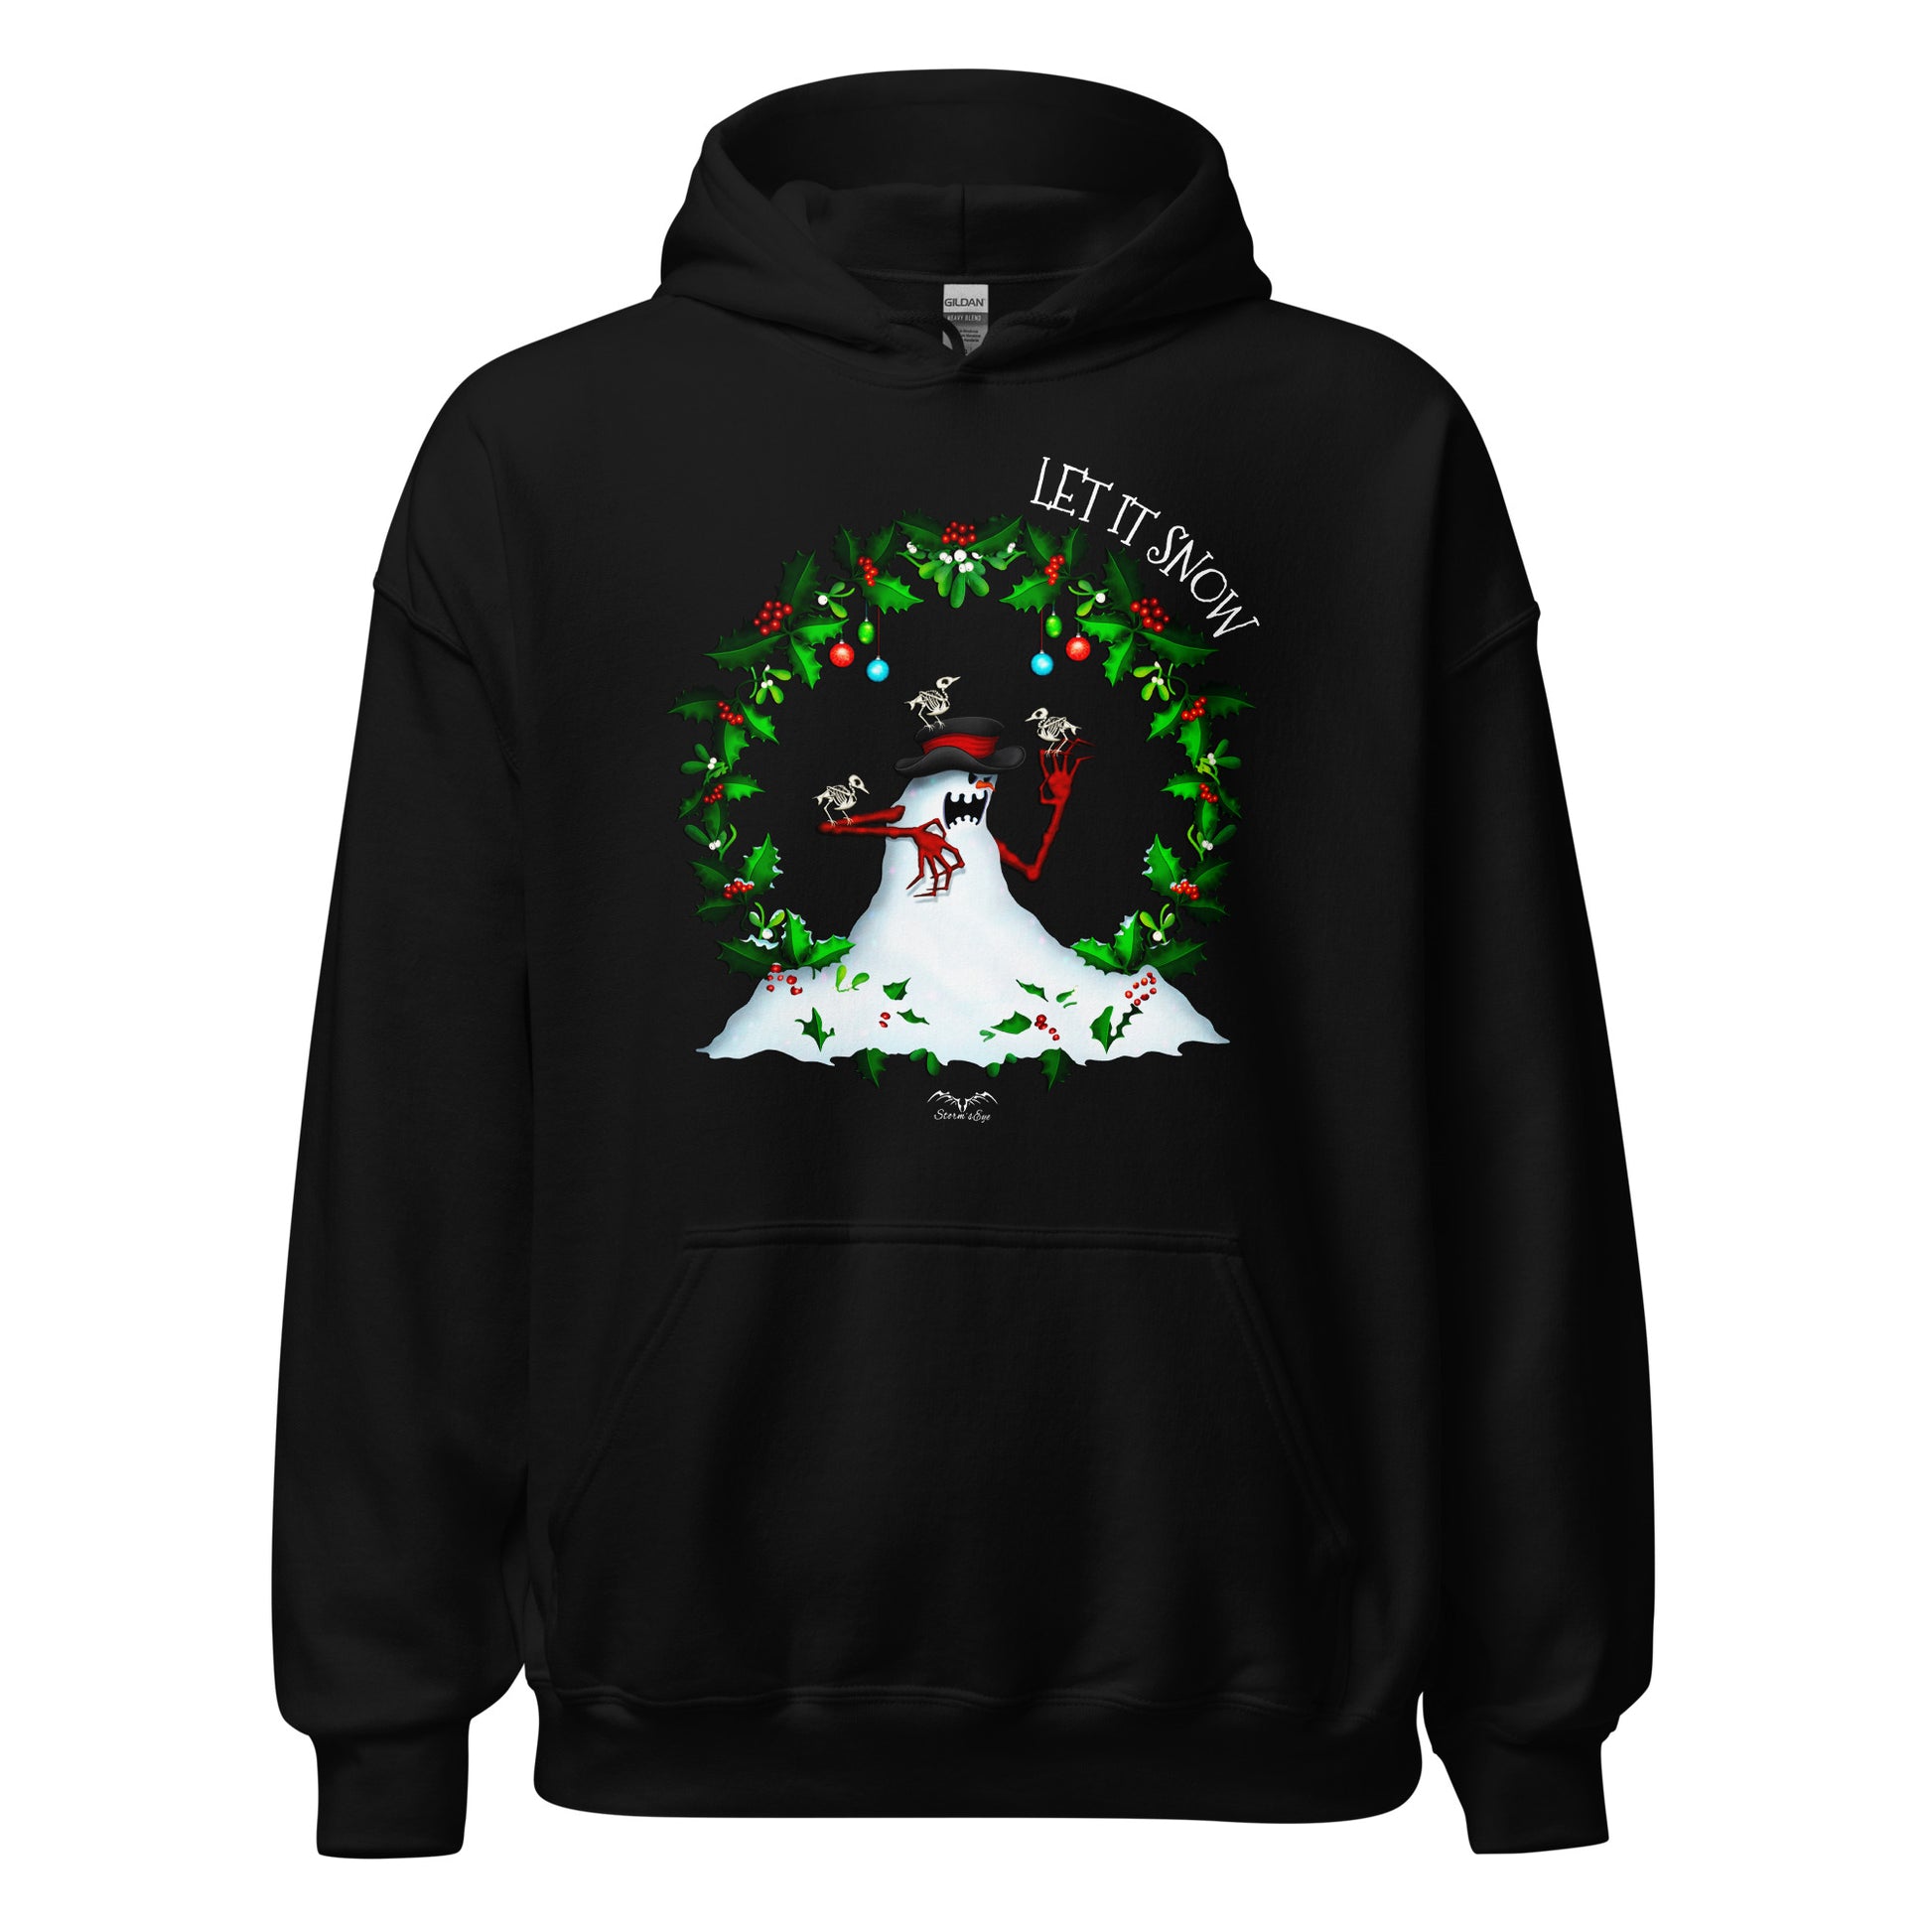 stormseye design evil snowman christmas hoodie flat view black